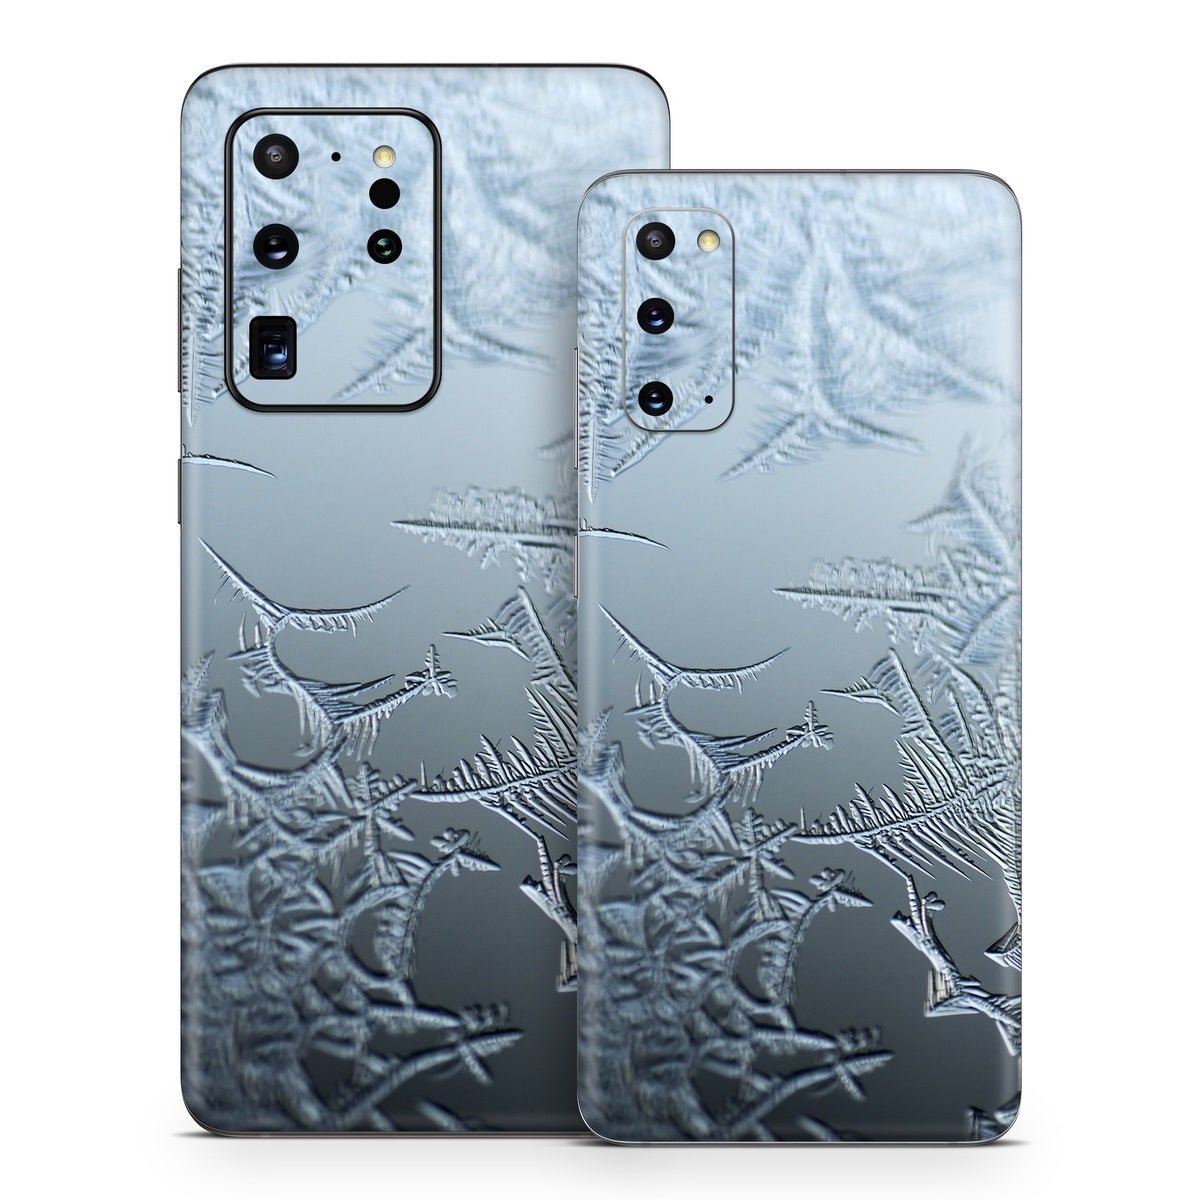 Icy - Samsung Galaxy S20 Skin - Andreas Stridsberg - DecalGirl